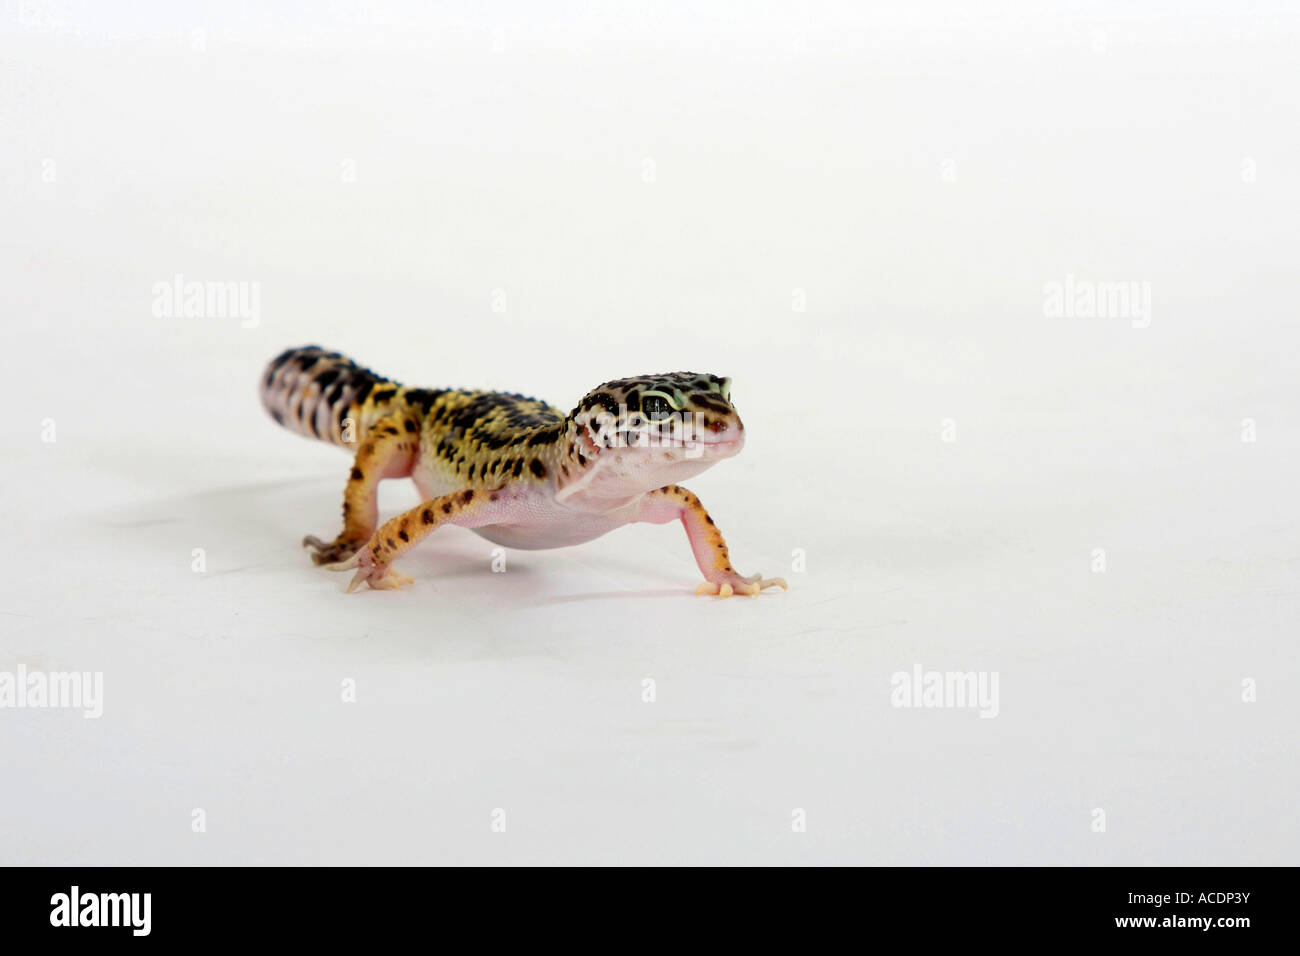 Leopard Gecko Eublepharis macularis Stock Photo